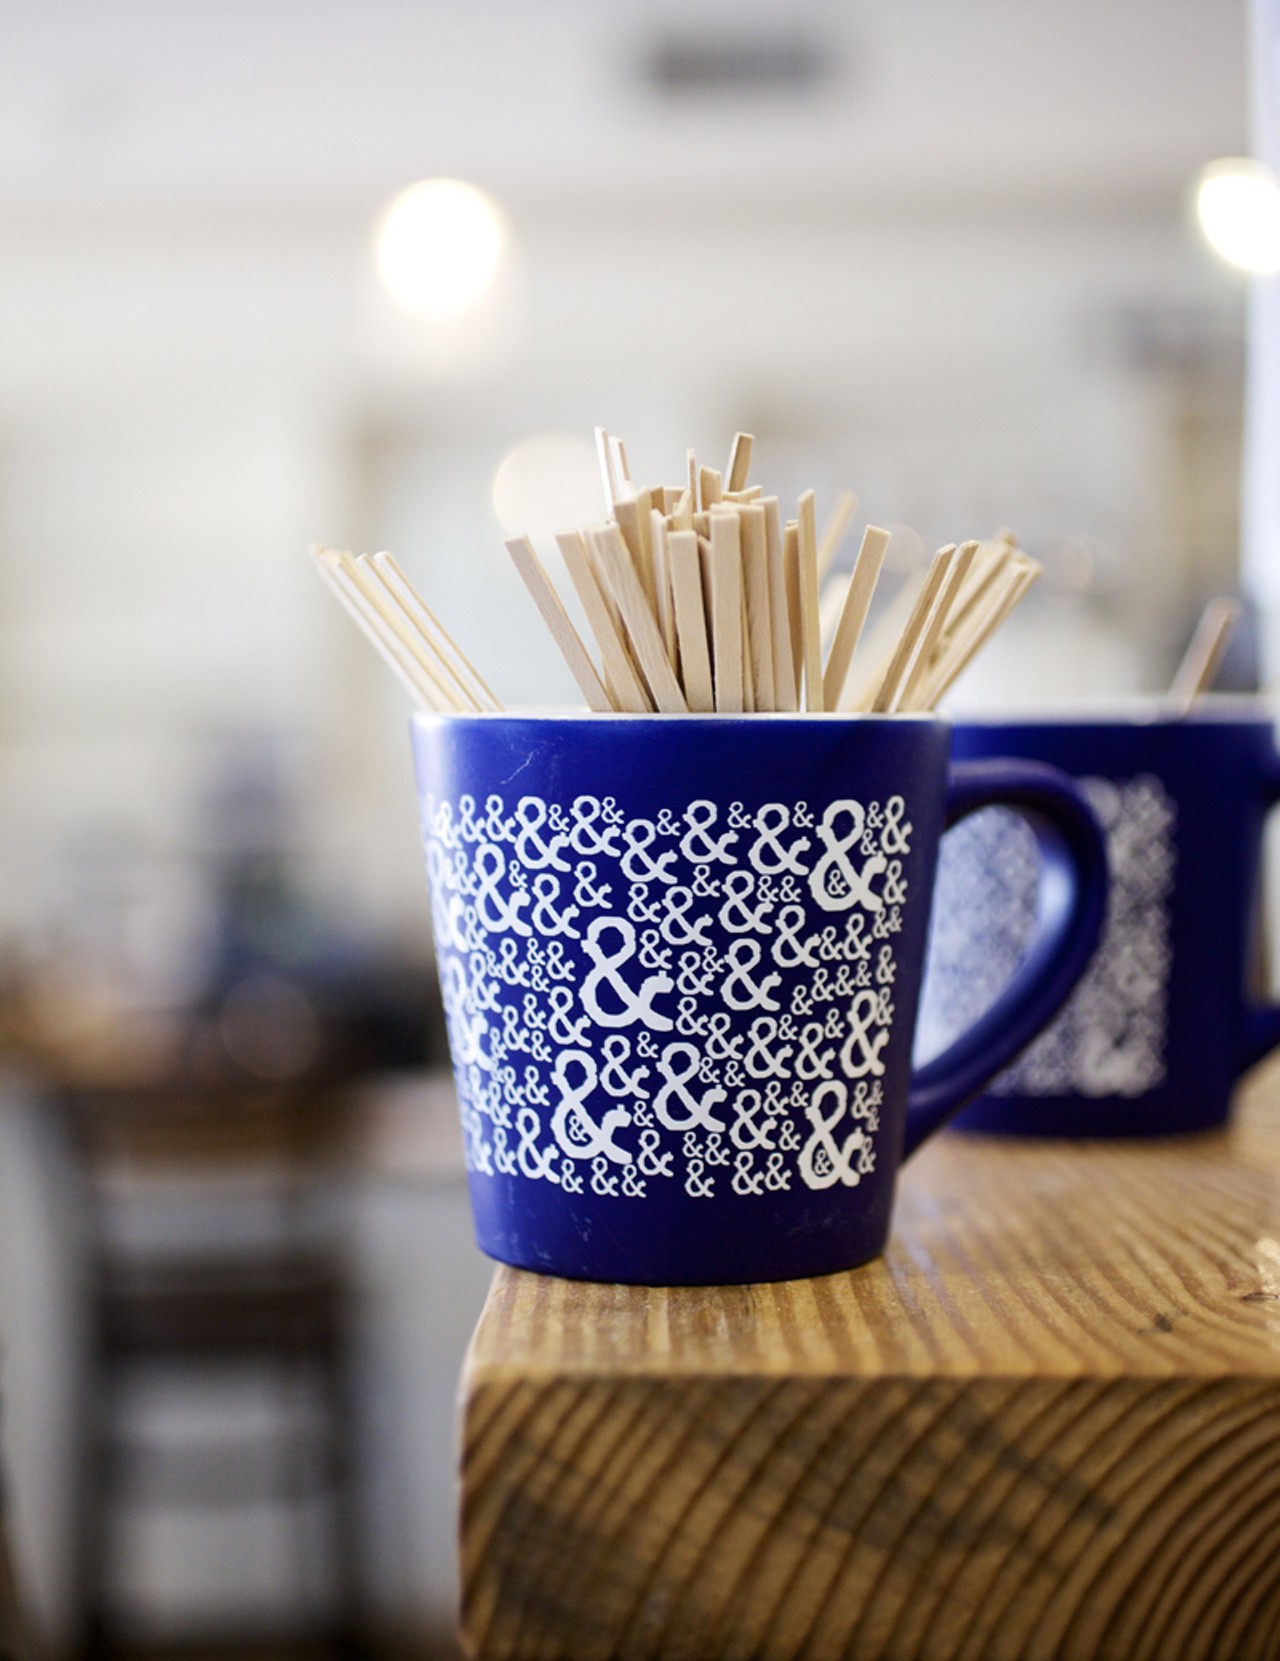 Coffee stirrers in the restaurants signature coffee mugs.